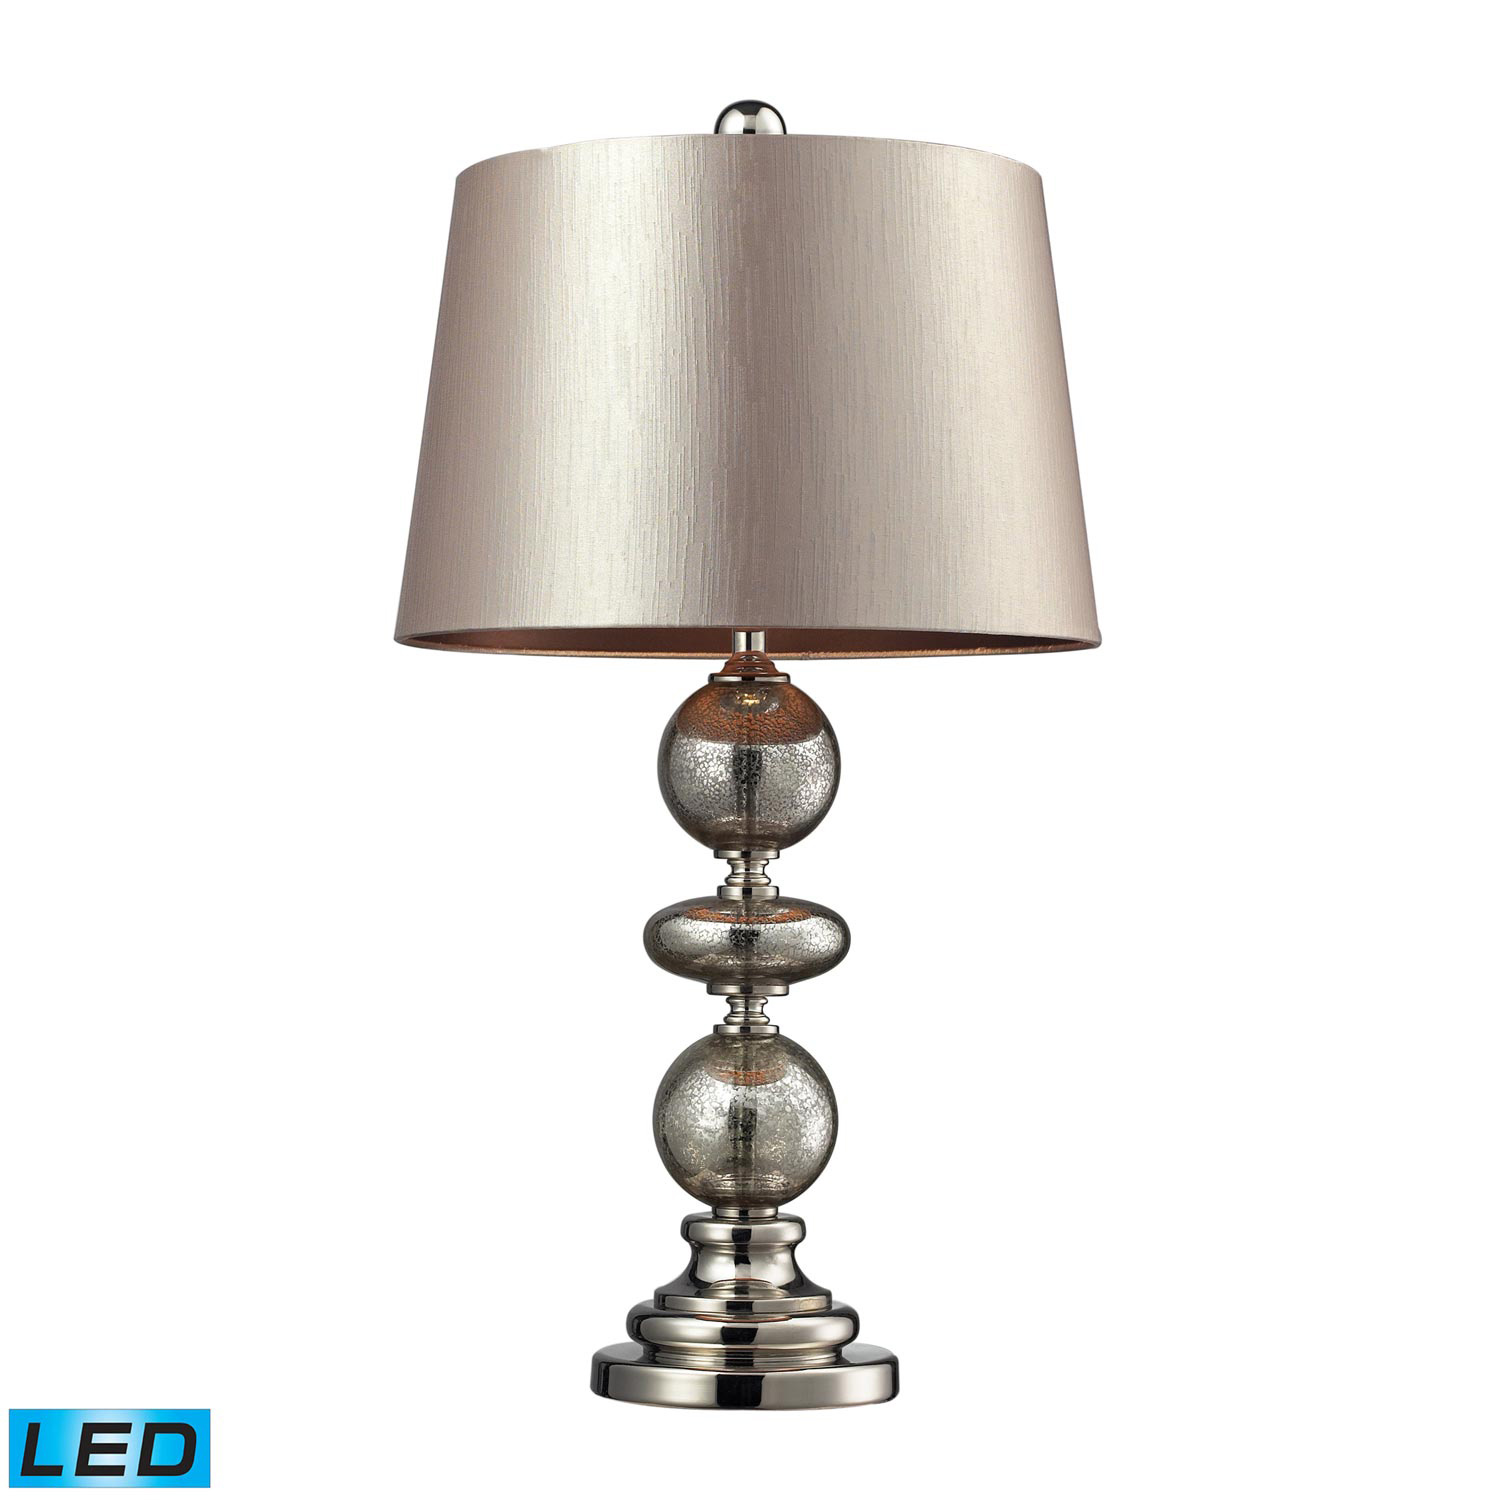 Elk Lighting D2227-LED Hollis Table Lamp - Antique Mercury Glass and Polished Nickle